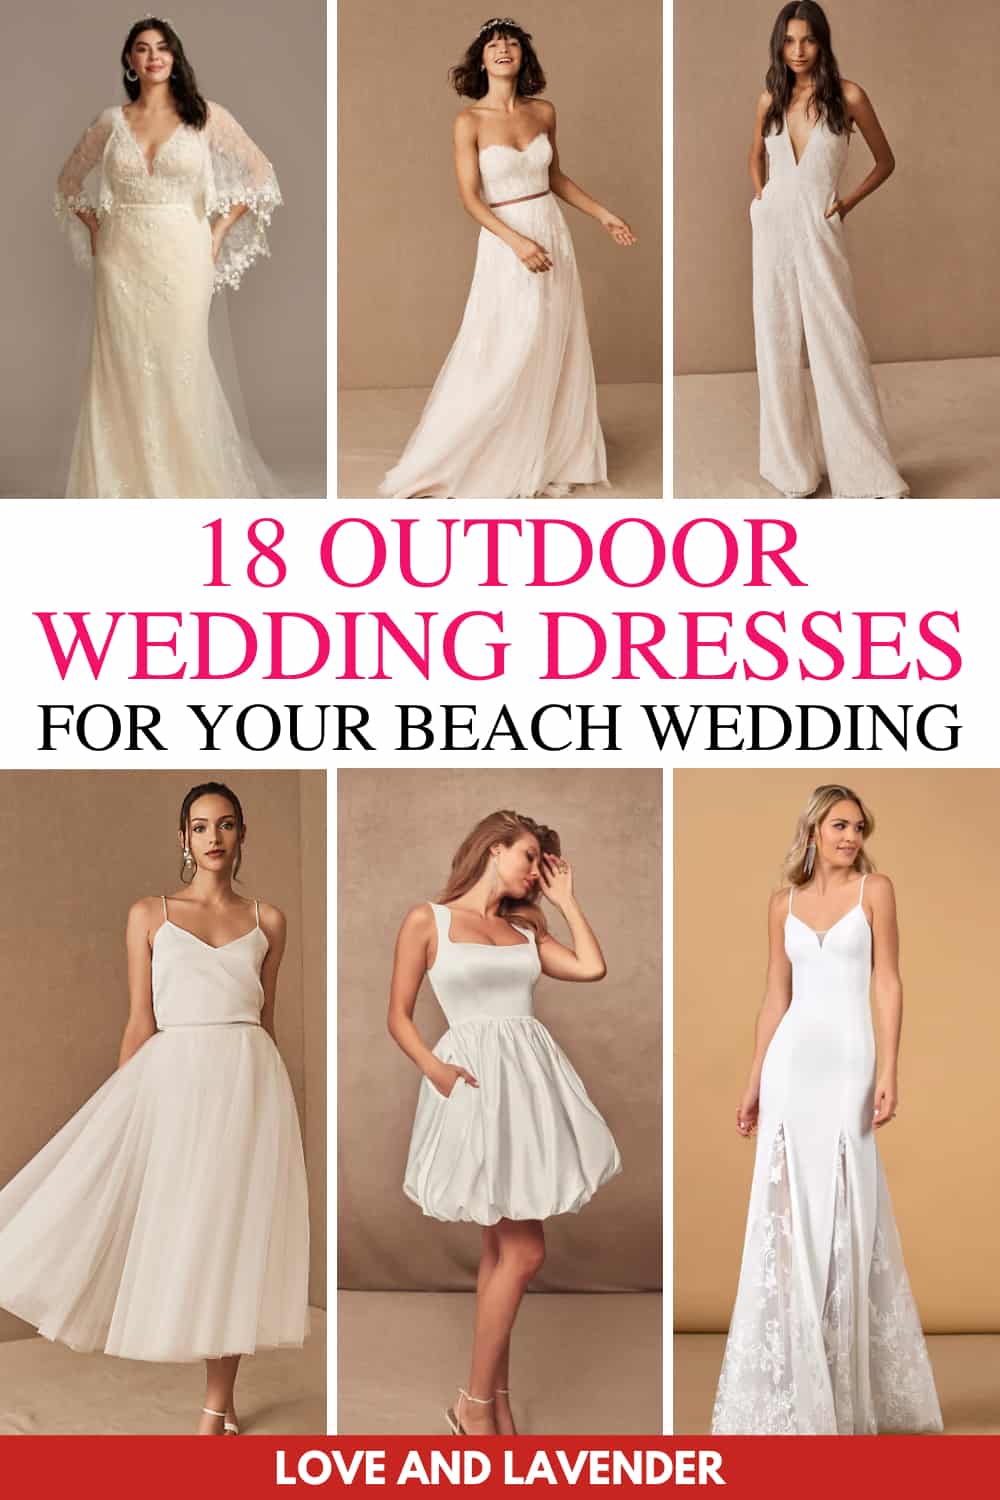 18 Outdoor Wedding Dresses - Pinterest Pin